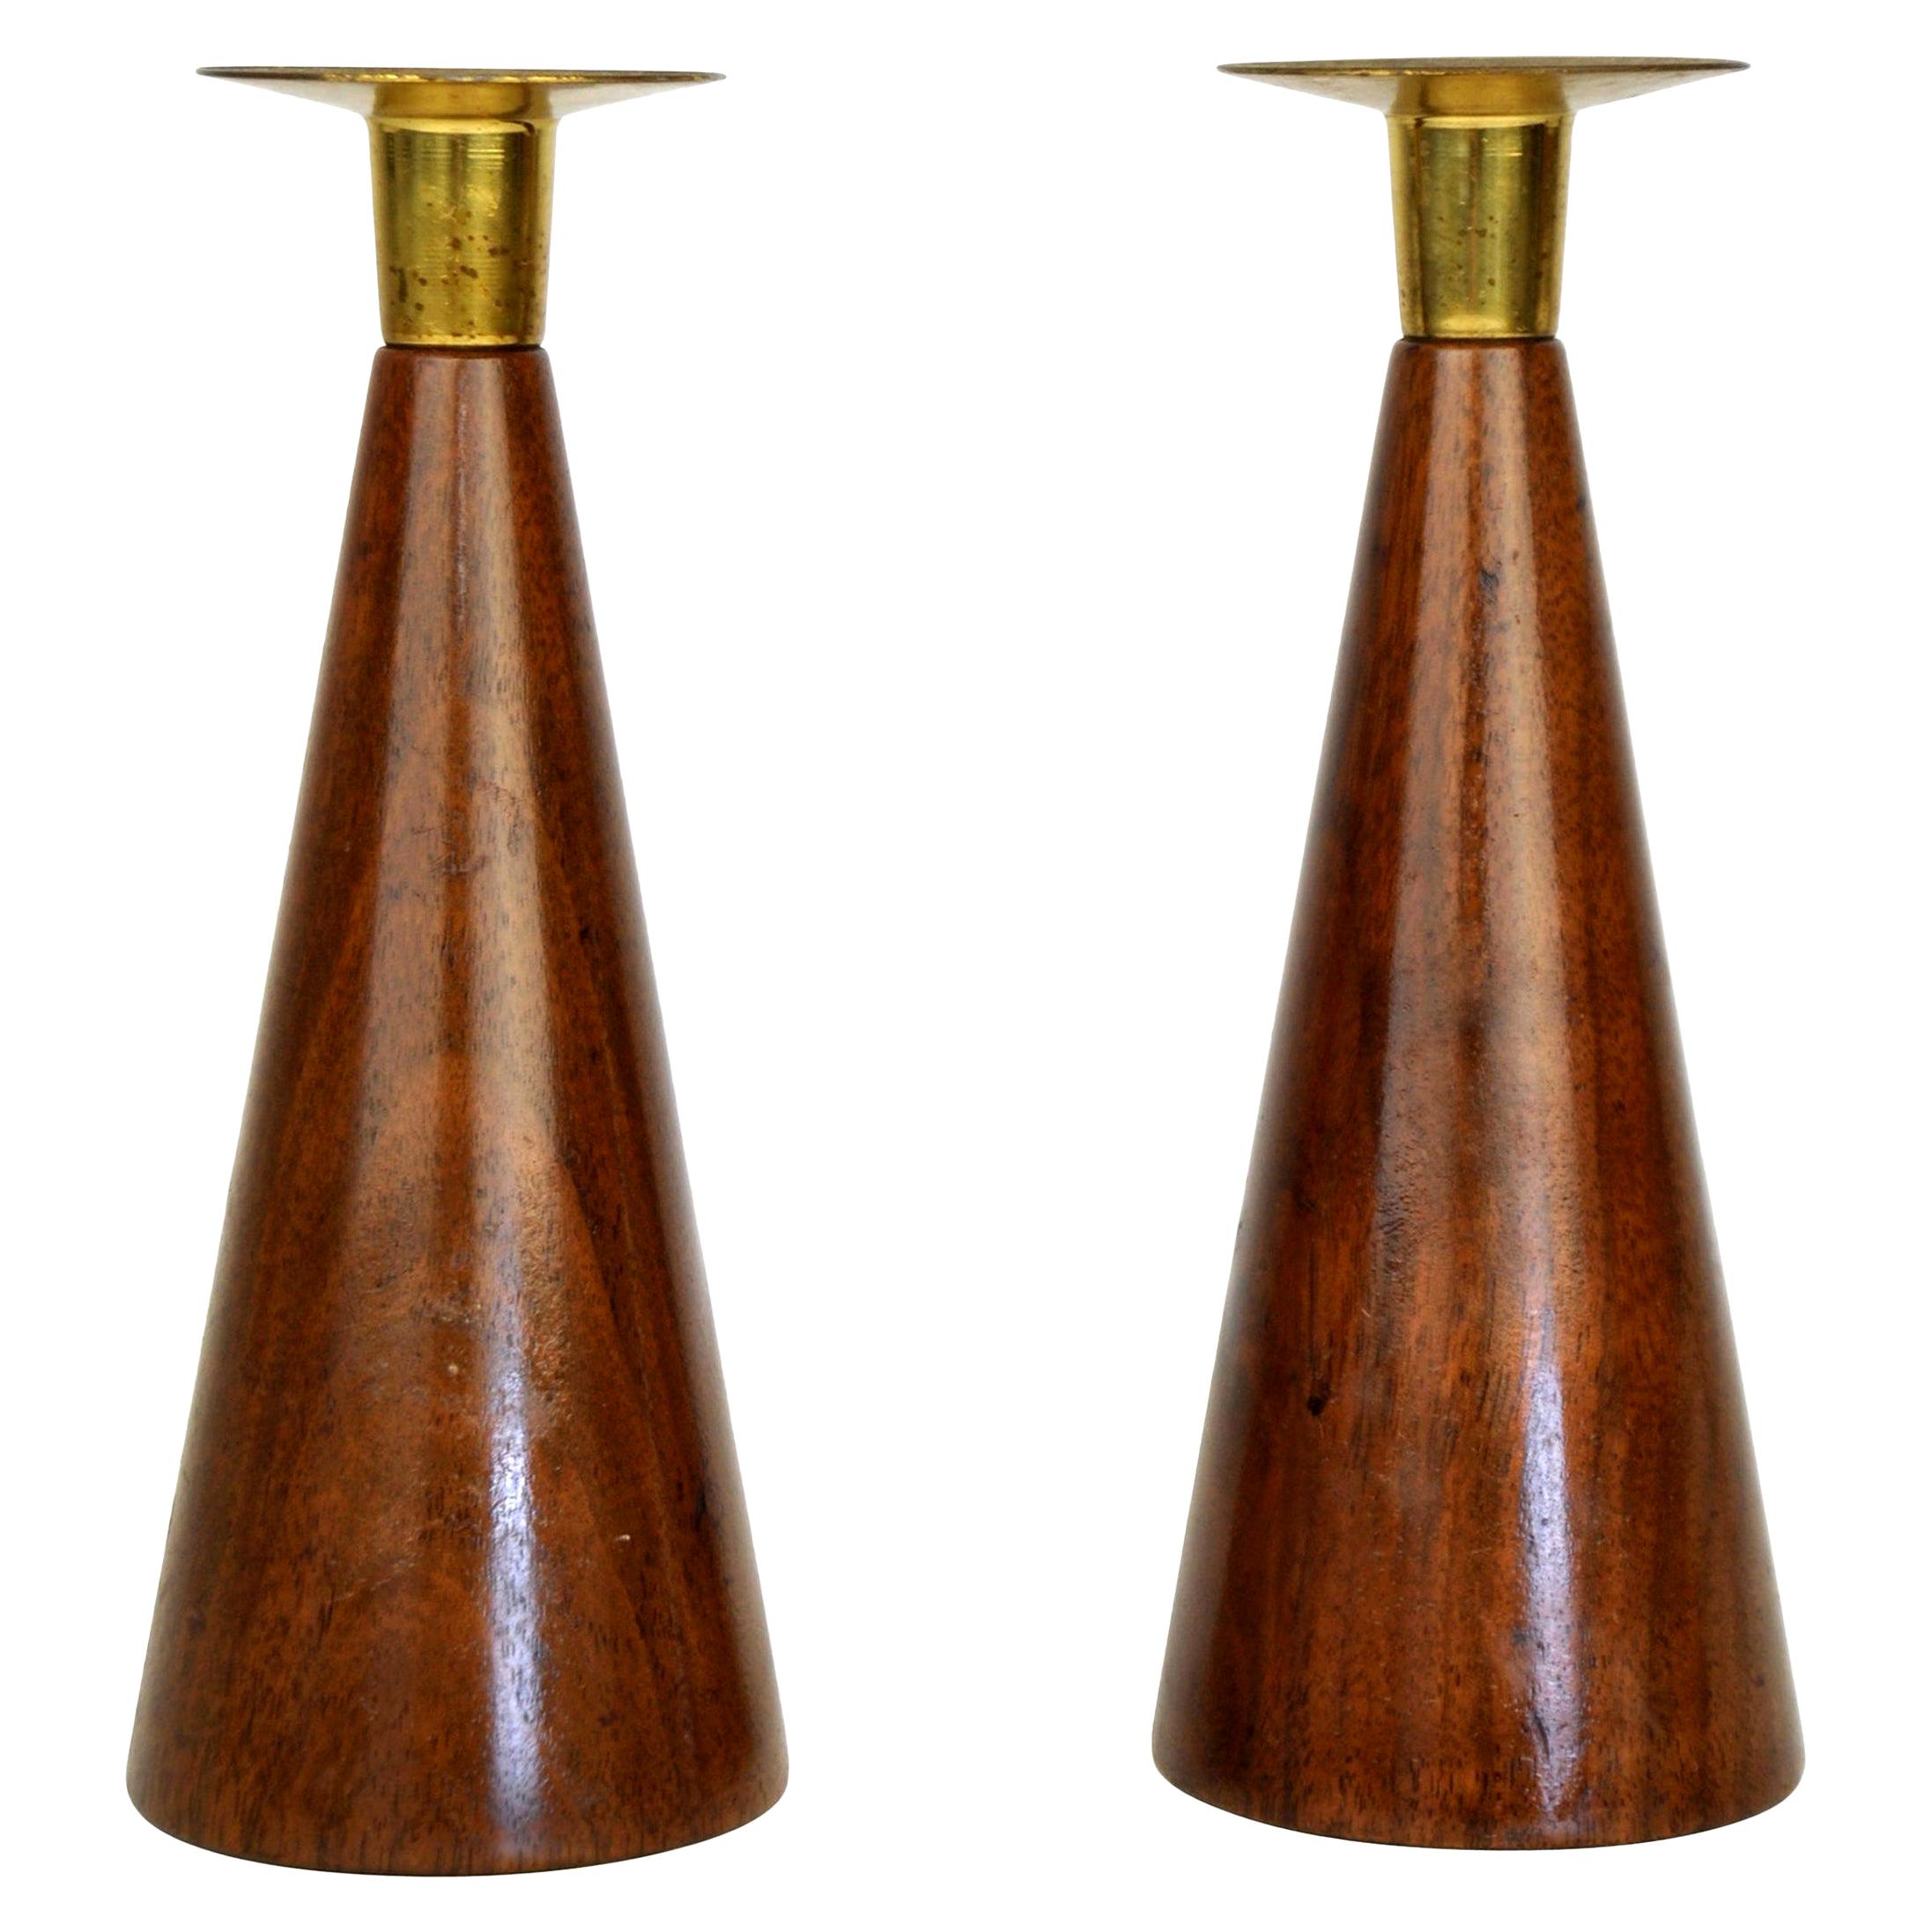 Pair of Danish Modern Walnut and Brass Candlesticks